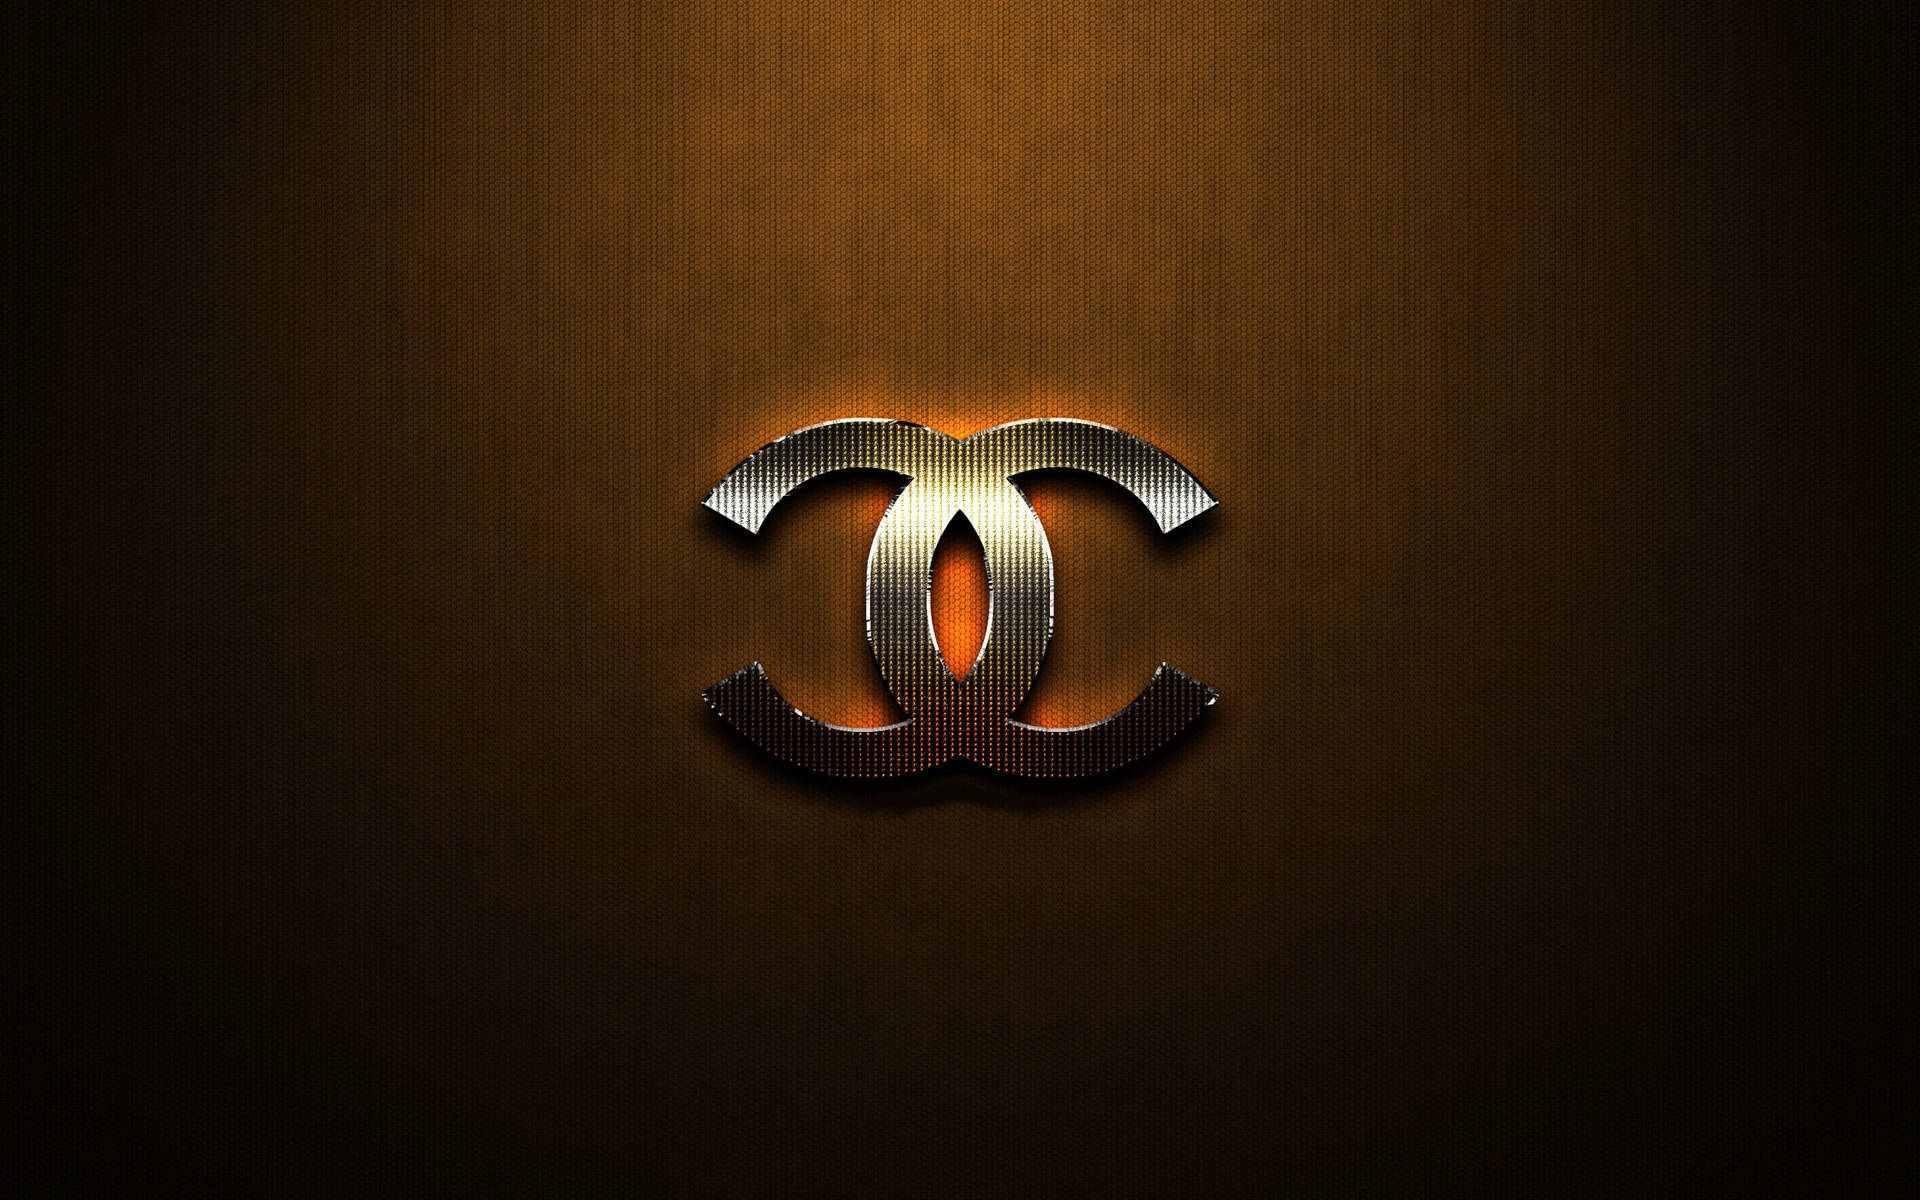 Chanel Logo Wallpaper